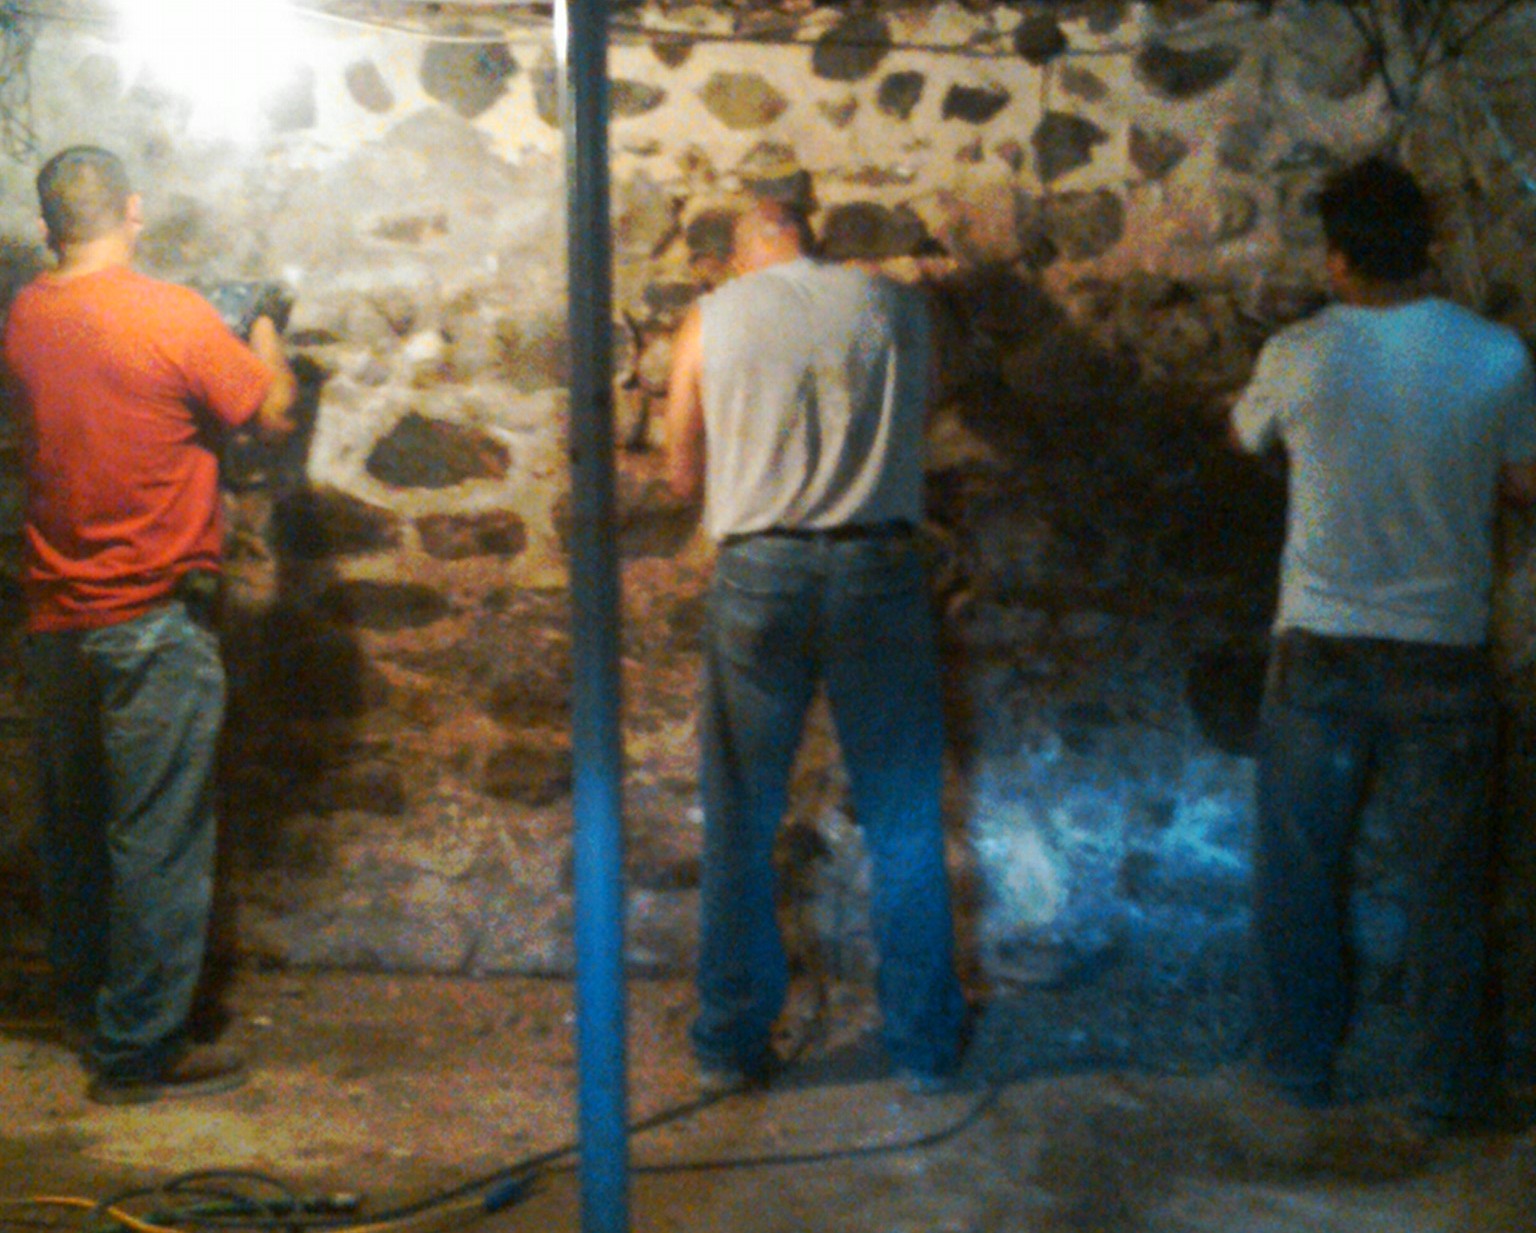 The team of Dans Custom Brickwork at work